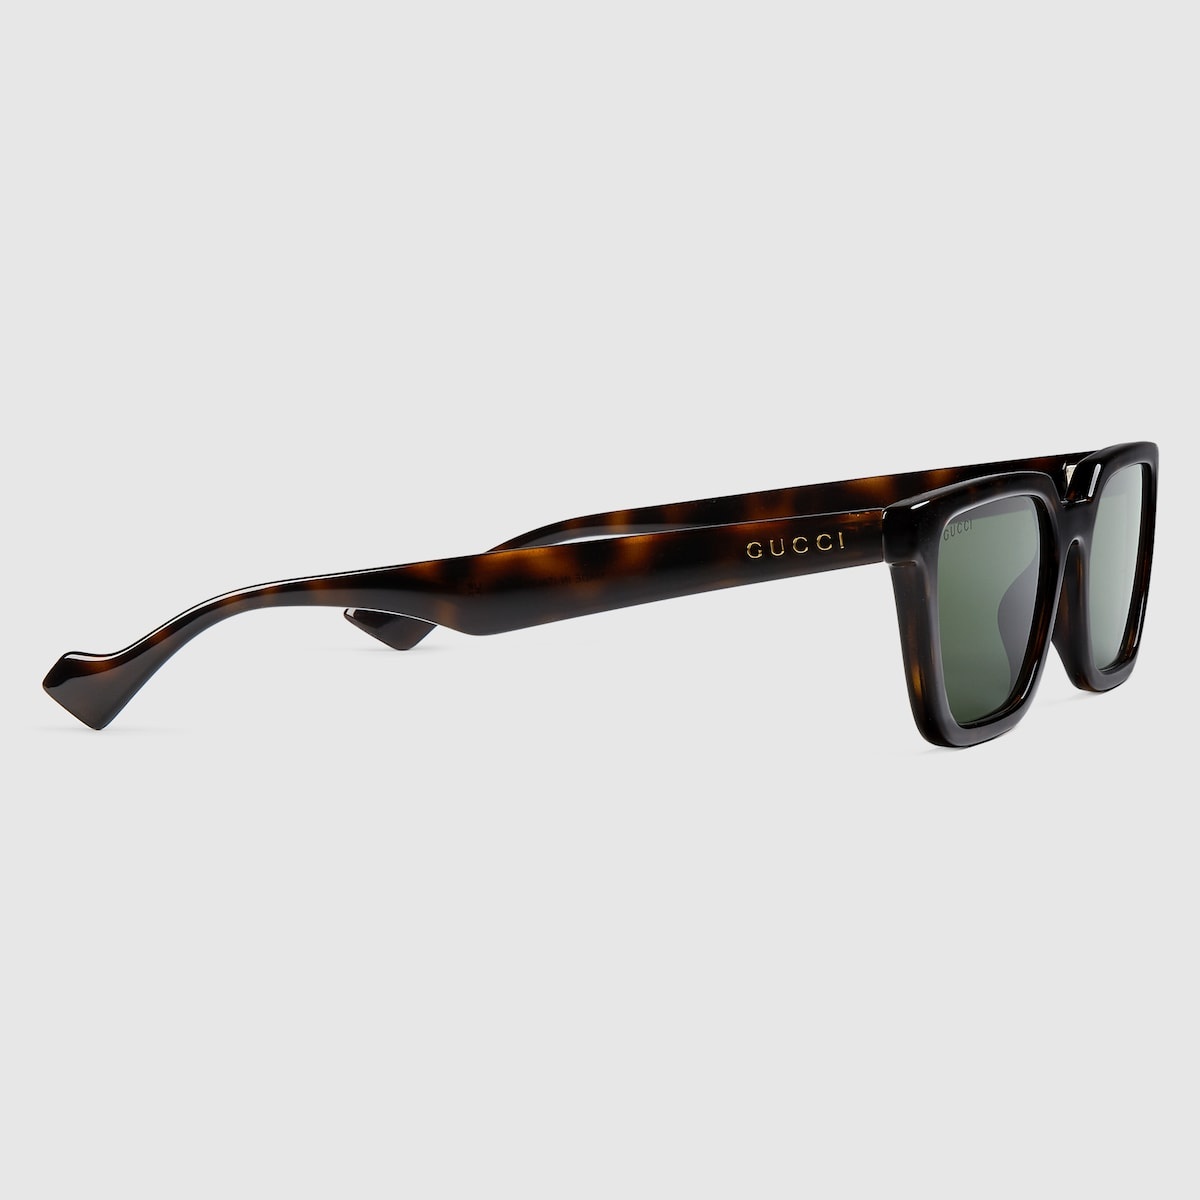 Cat-eye shaped frame sunglasses - 2